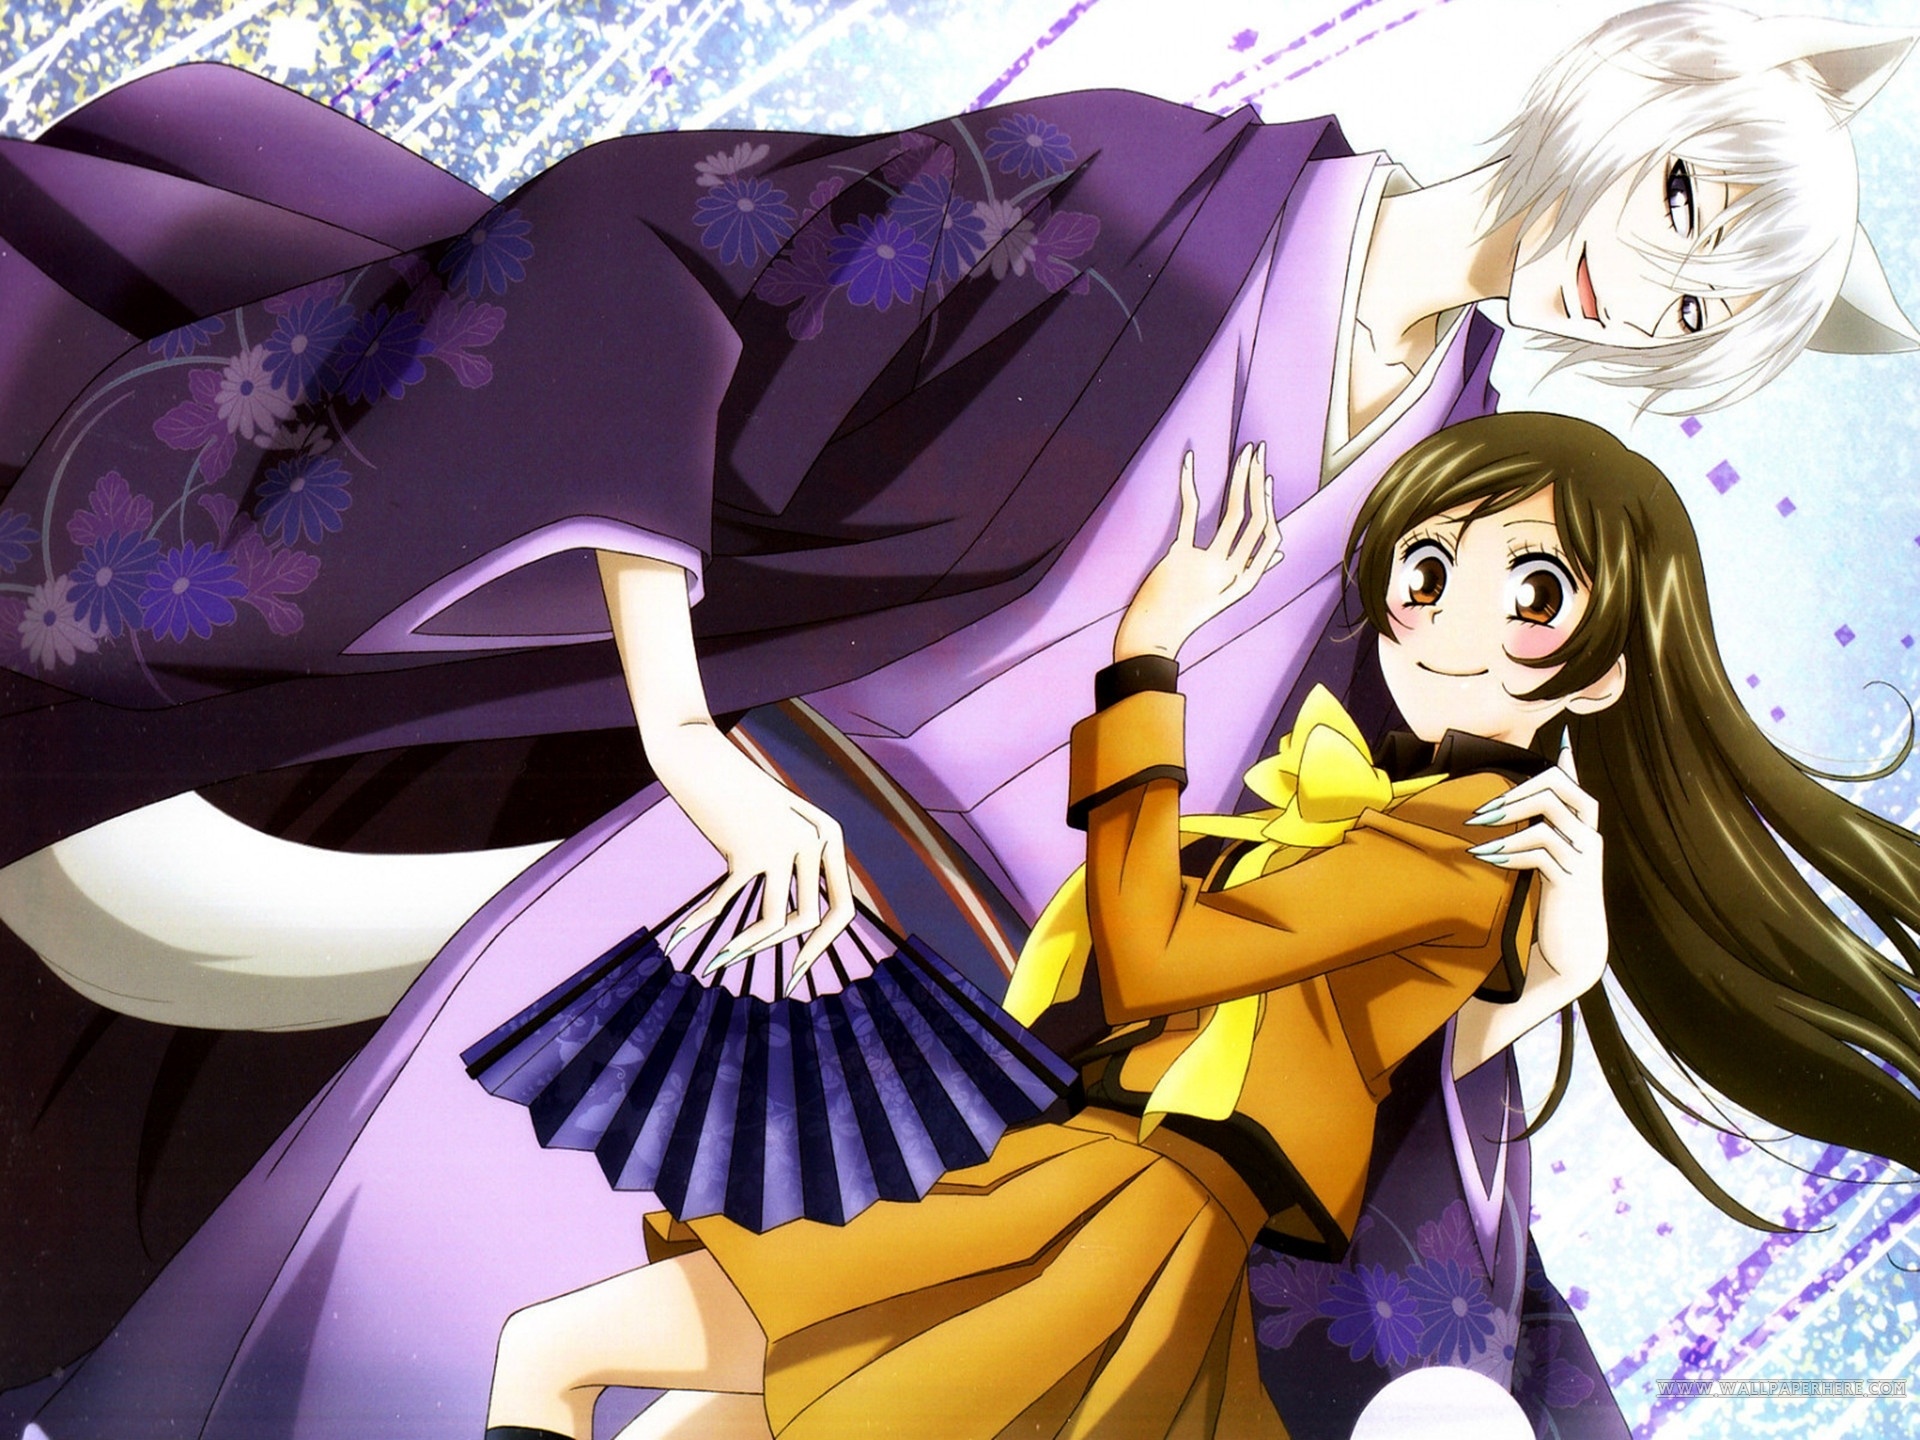 Kamisama (Anime), Tomoe and Nanami, Top free wallpapers, Stunning backgrounds, 1920x1440 HD Desktop